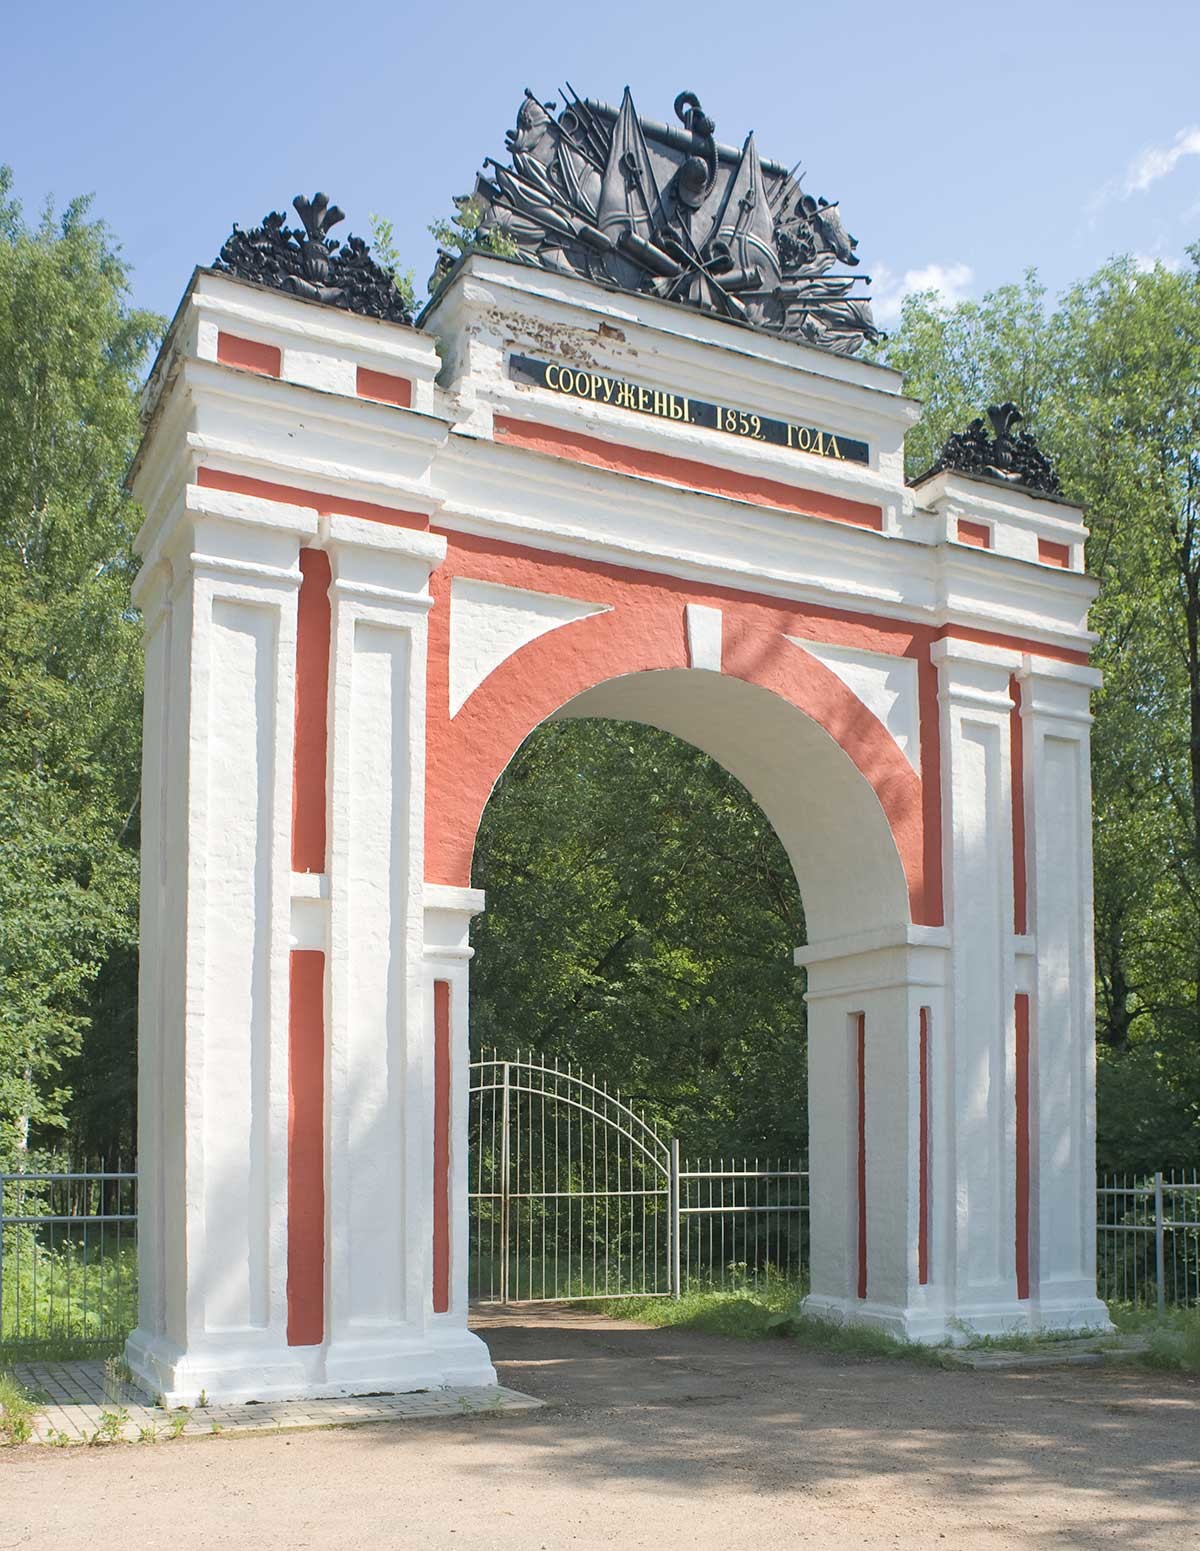 Veskovo. Triumphal Arch (entrance to estate). June 7, 2019